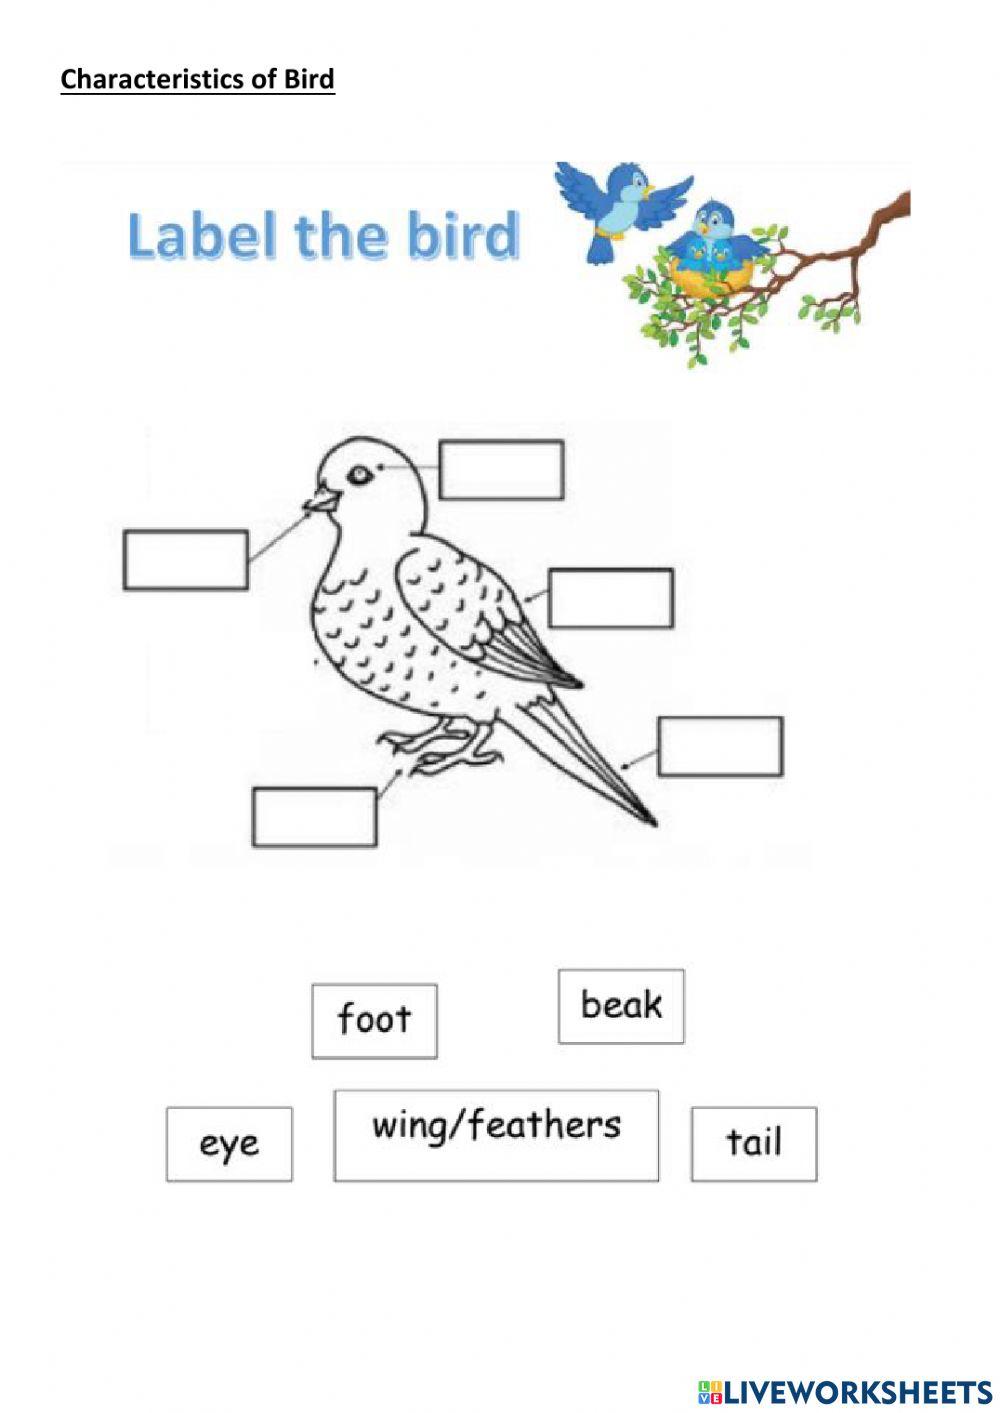 Characteristics of birds and amphibians worksheet